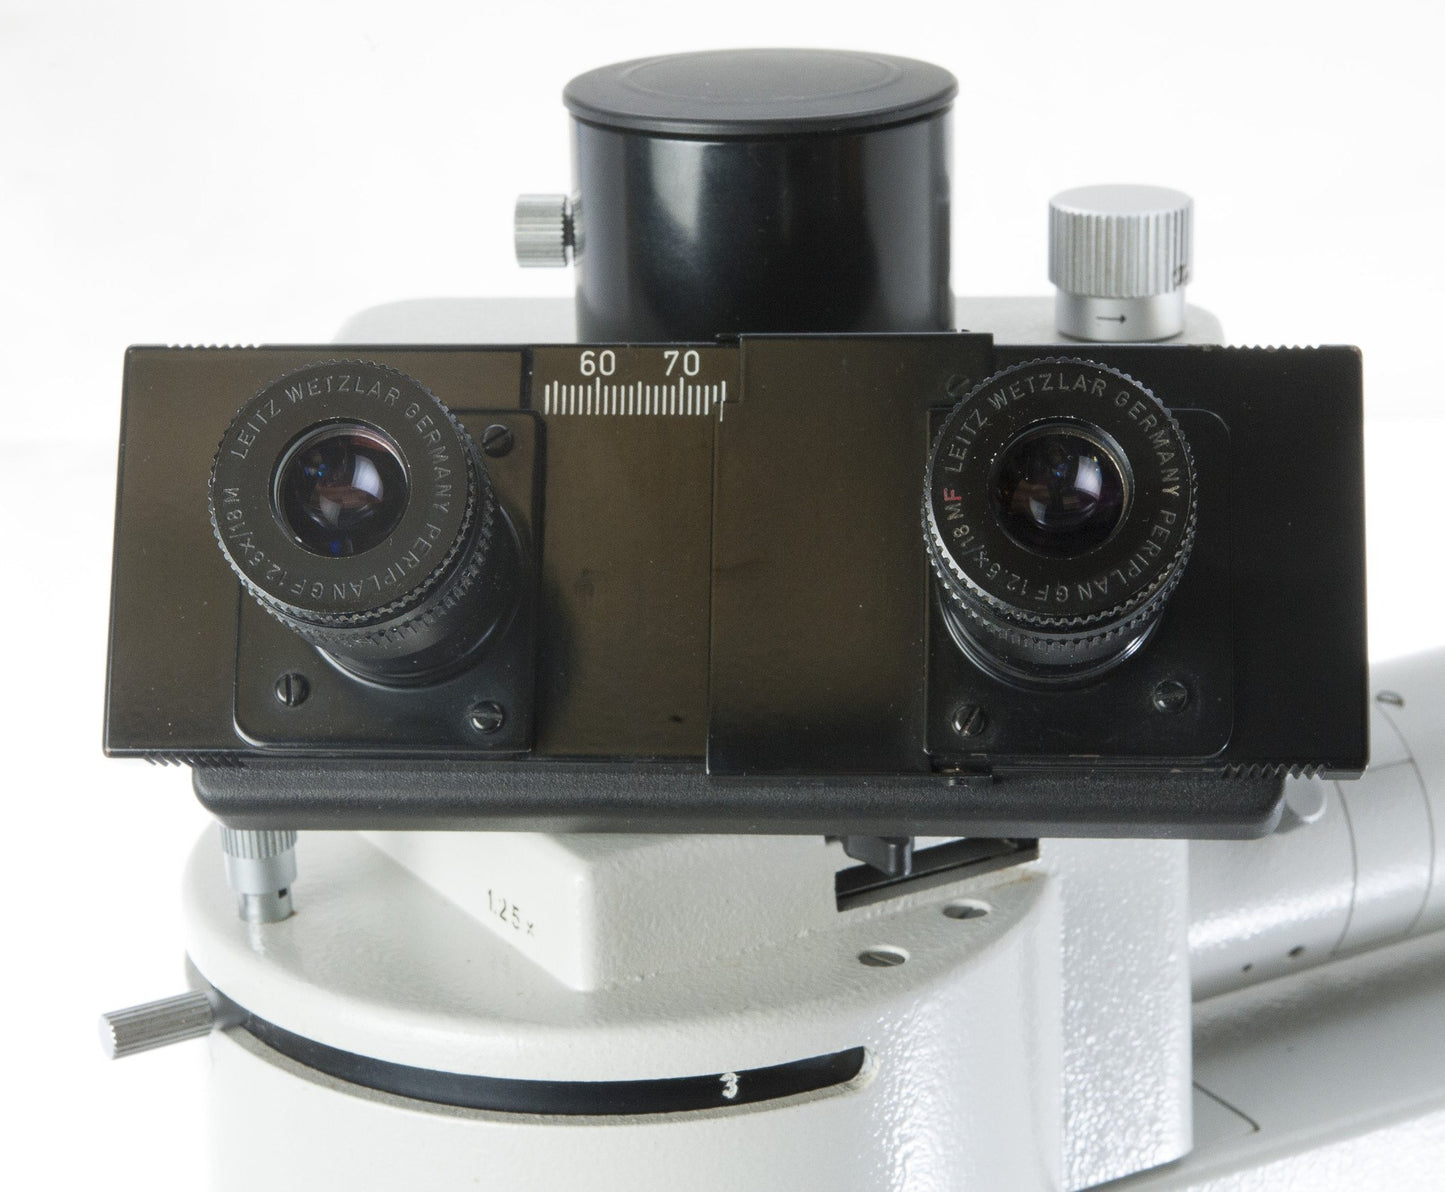 Leitz Dialux 20 Fluorescence Microscope - Microscope Central
 - 4